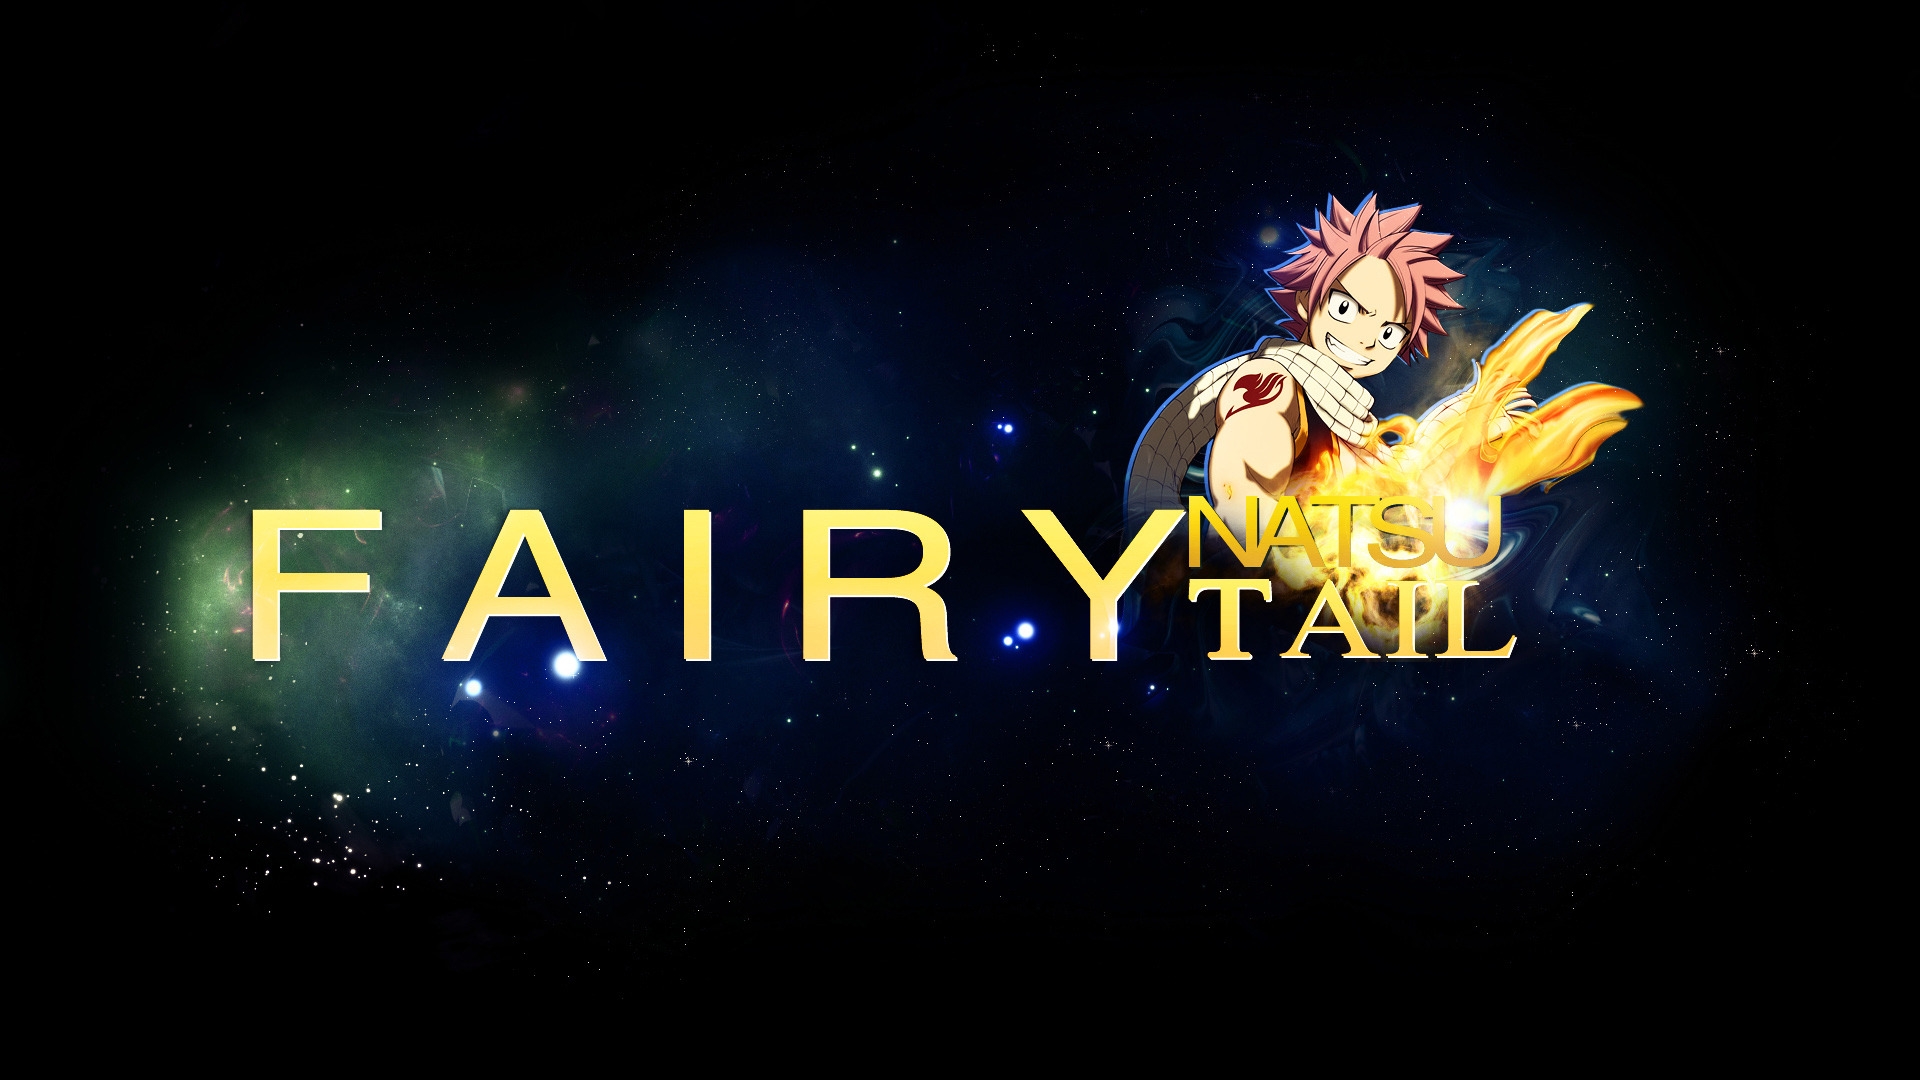 Fairy Tail Natsu for 1920 x 1080 HDTV 1080p resolution